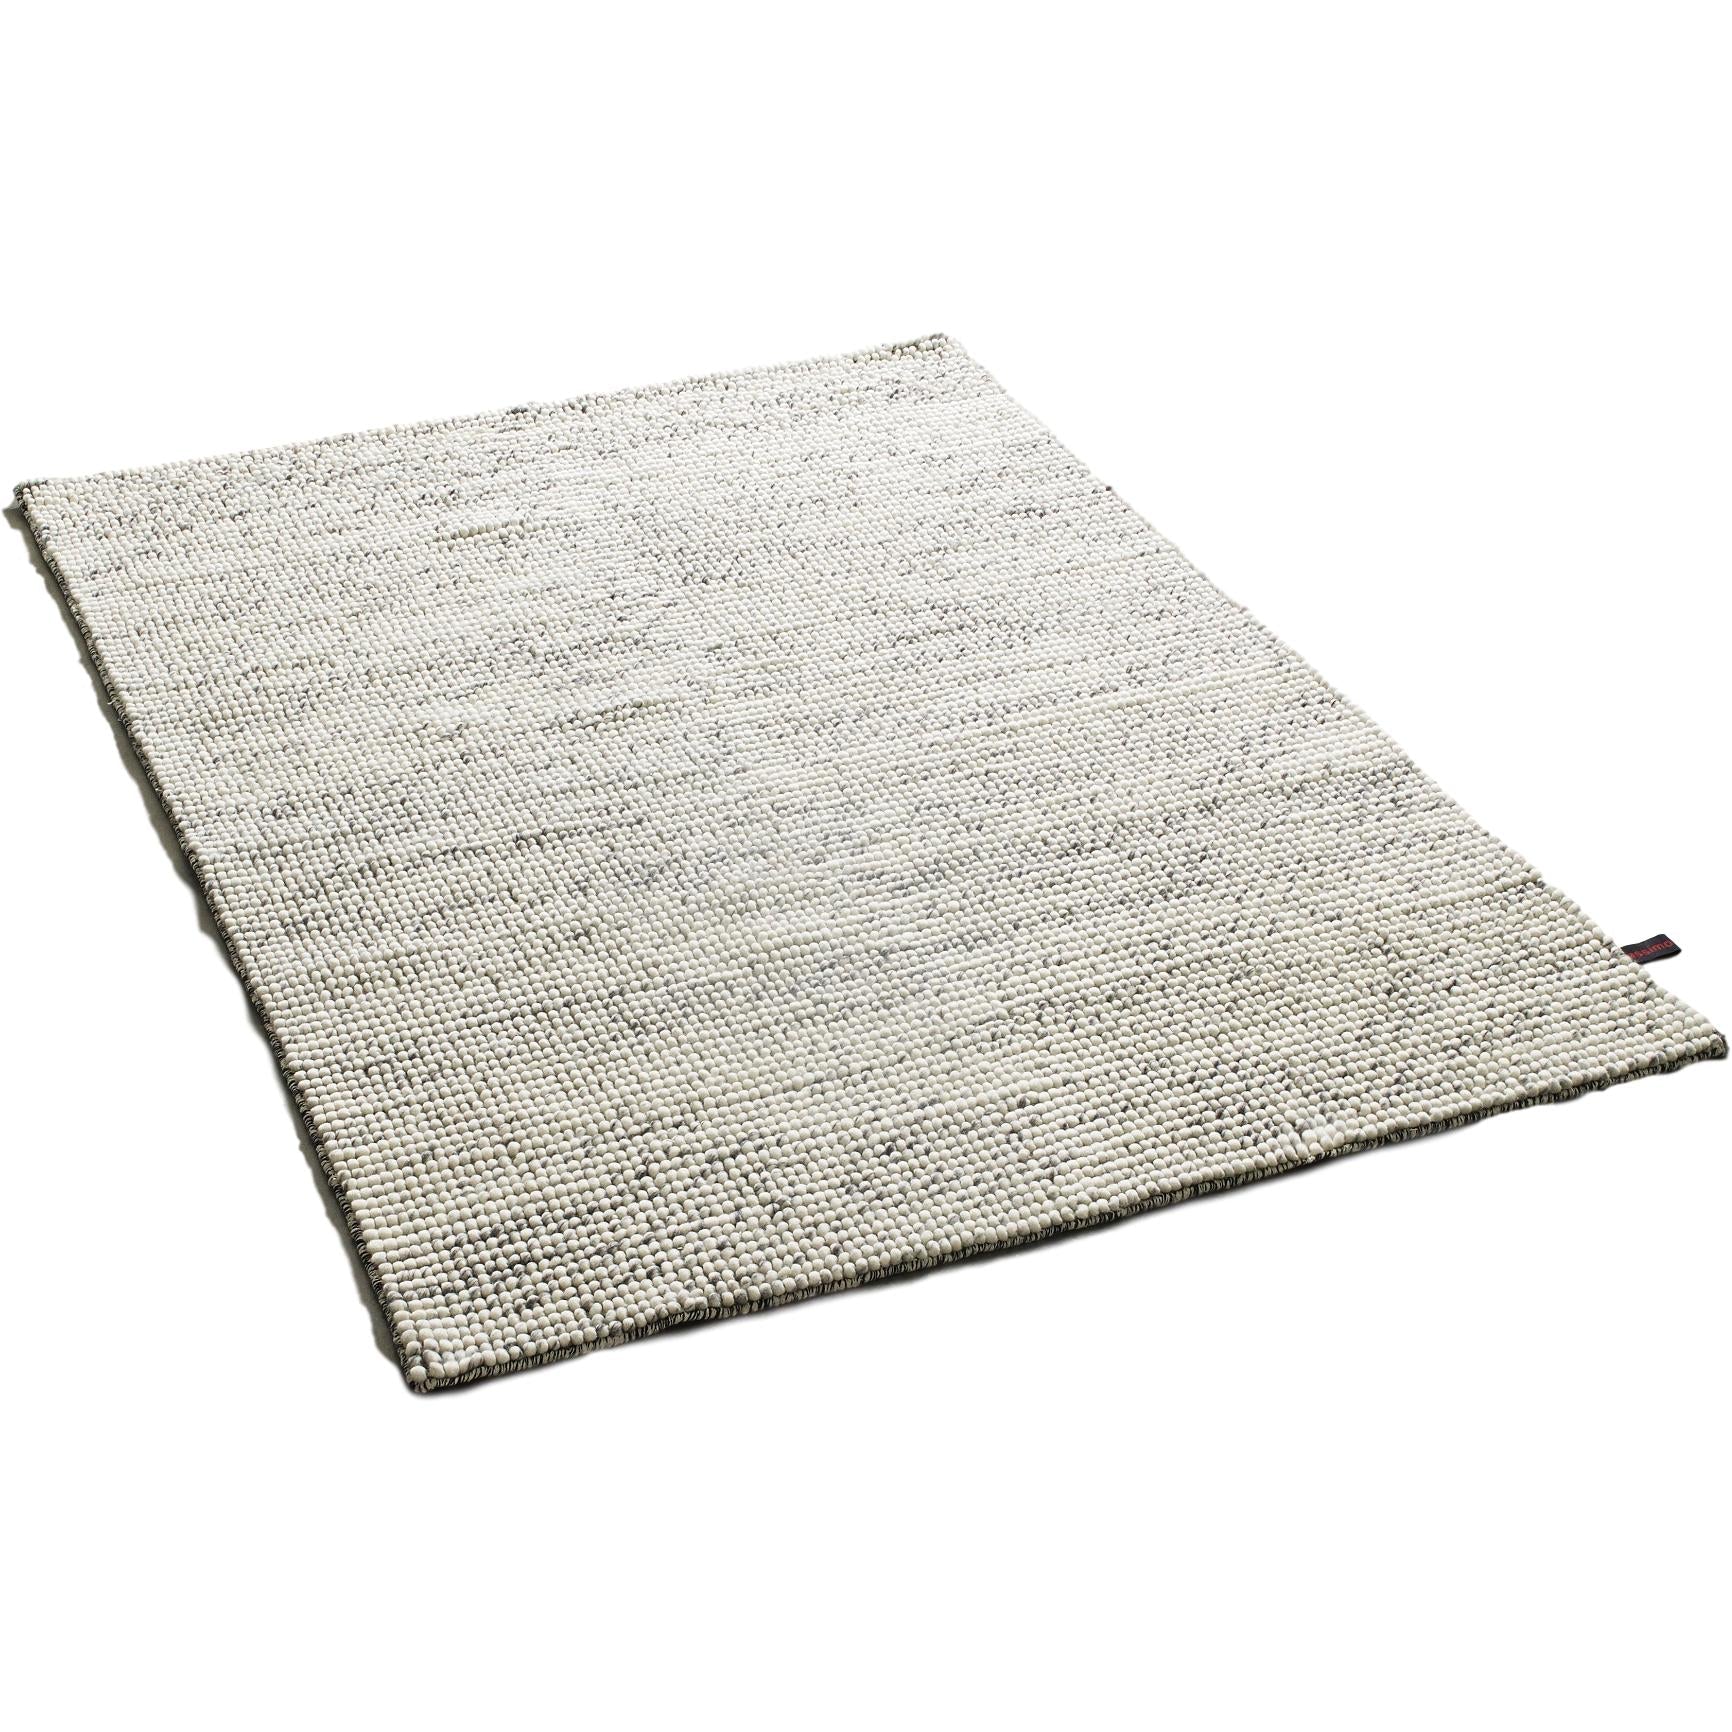 Massimo bobler tæppe blandet grå, 170x240 cm